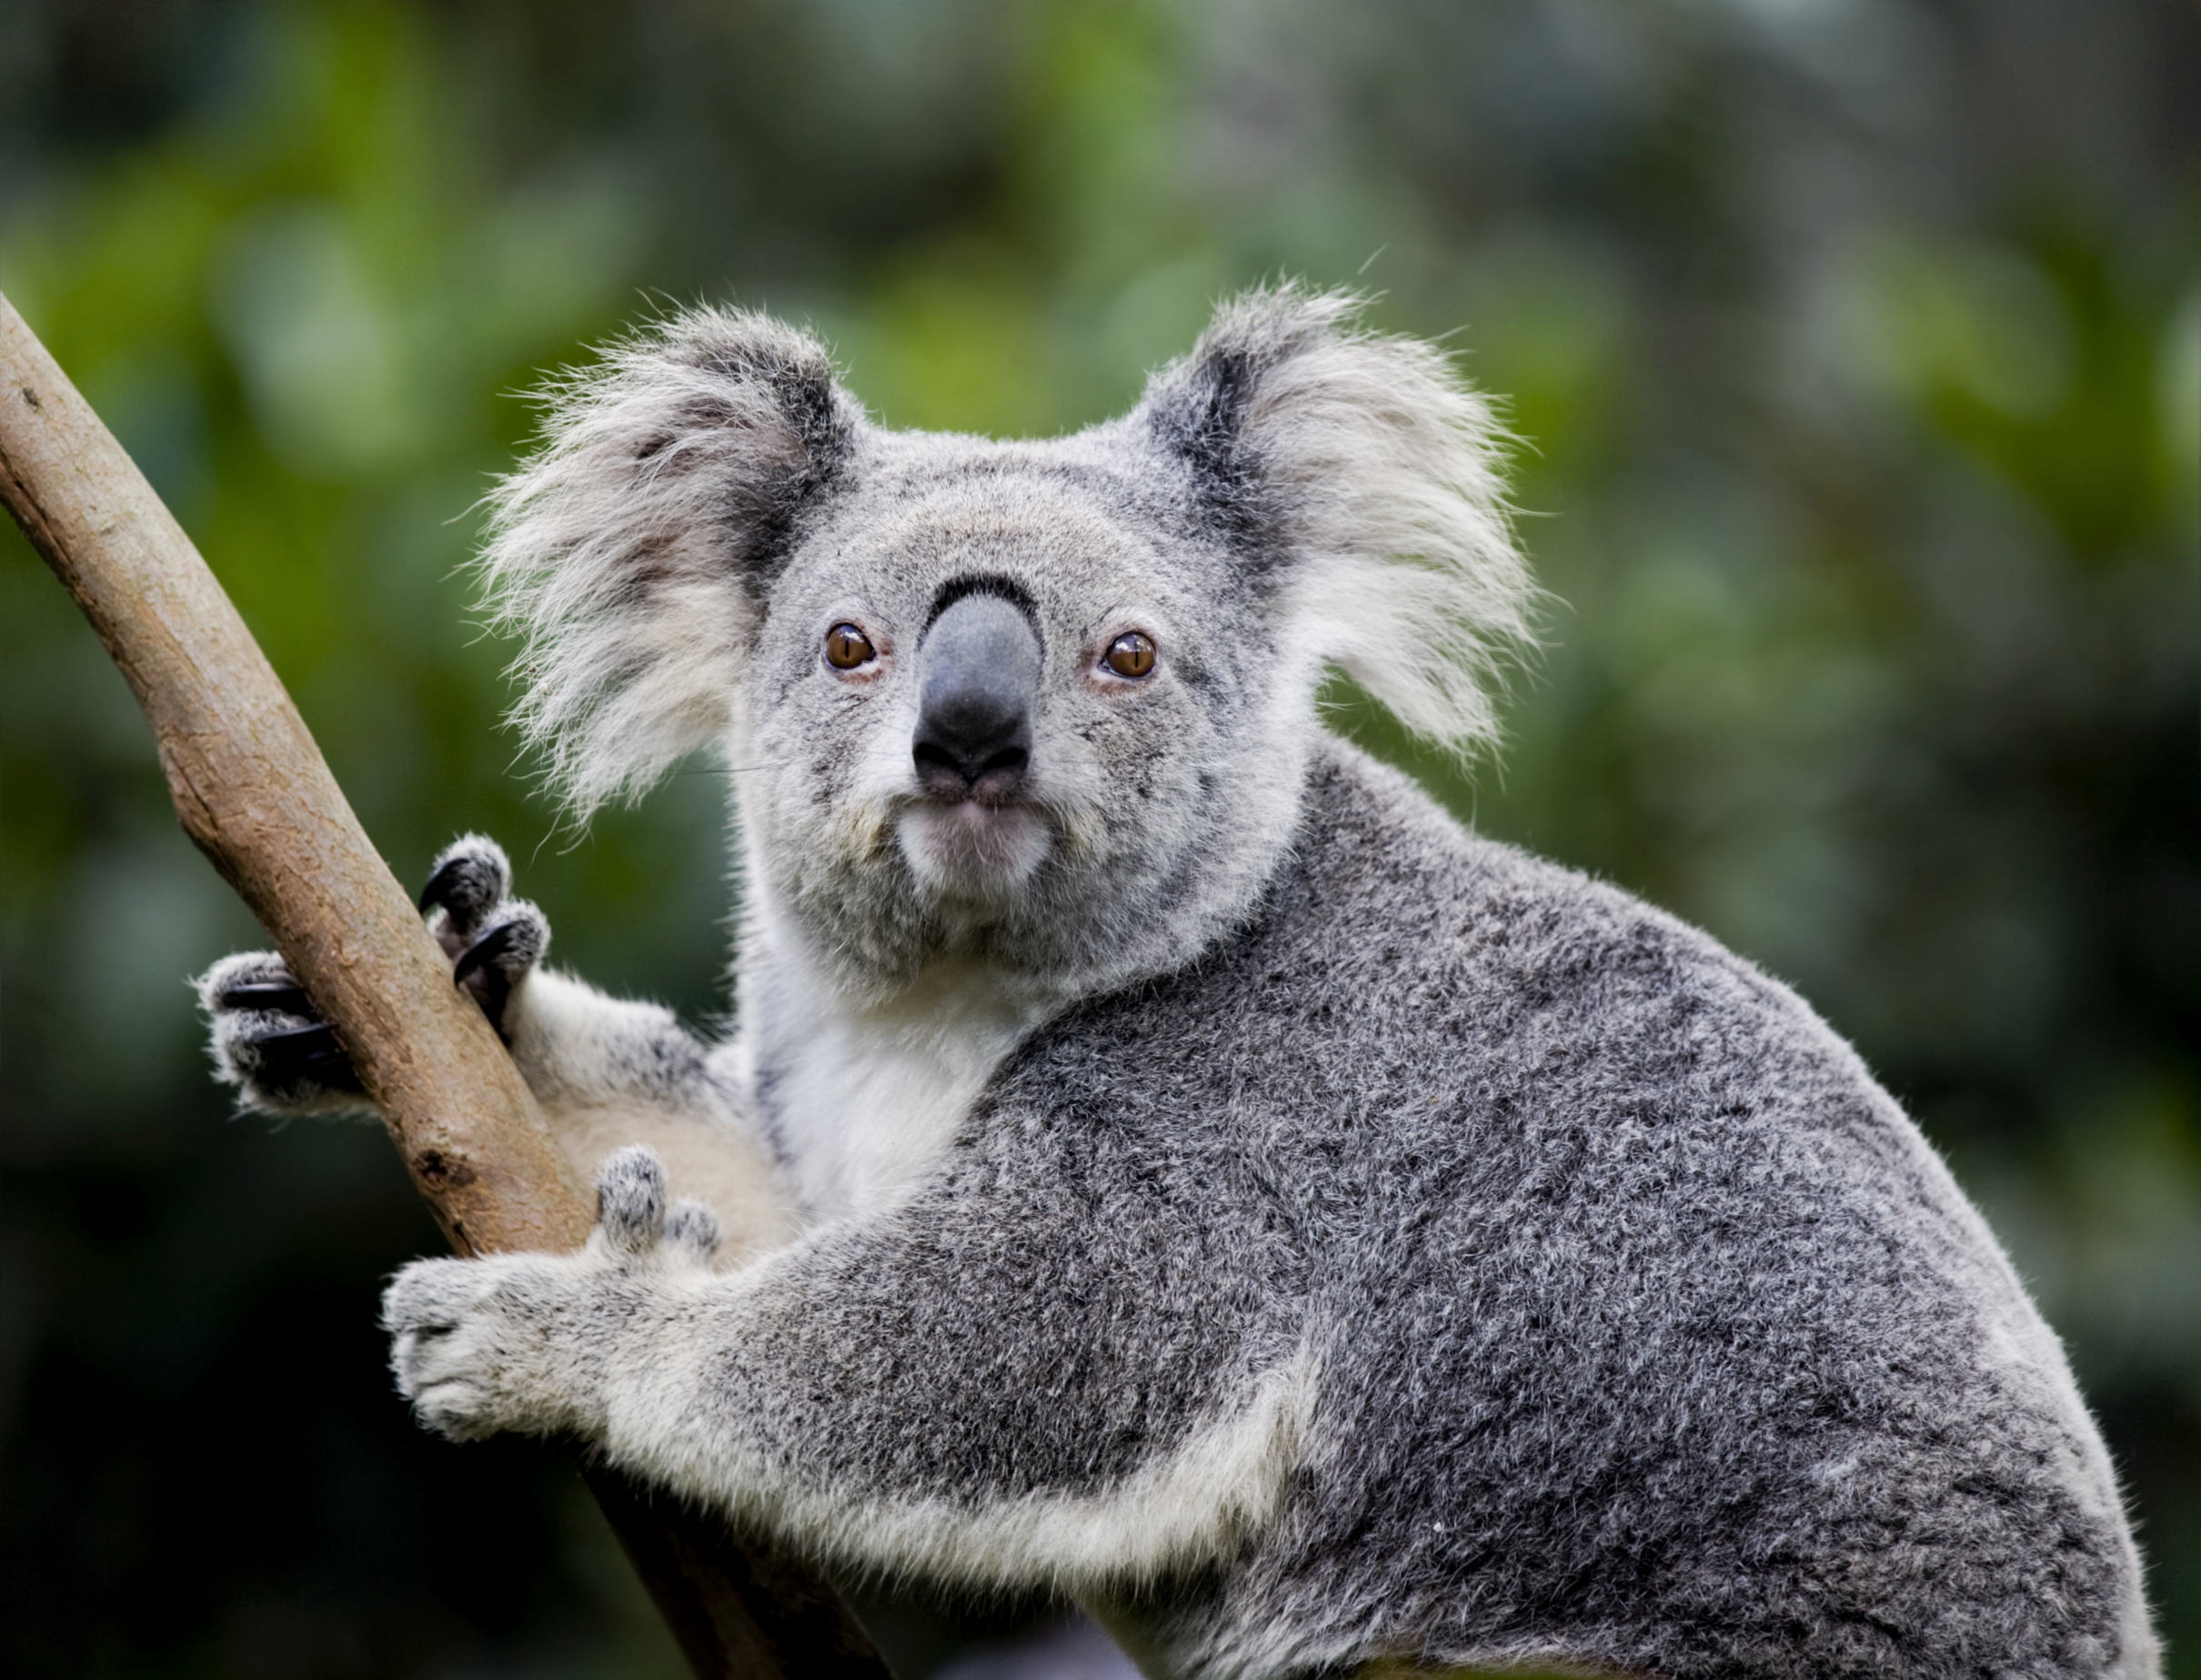 Port Macquarie, New South Wales, has a large koala population